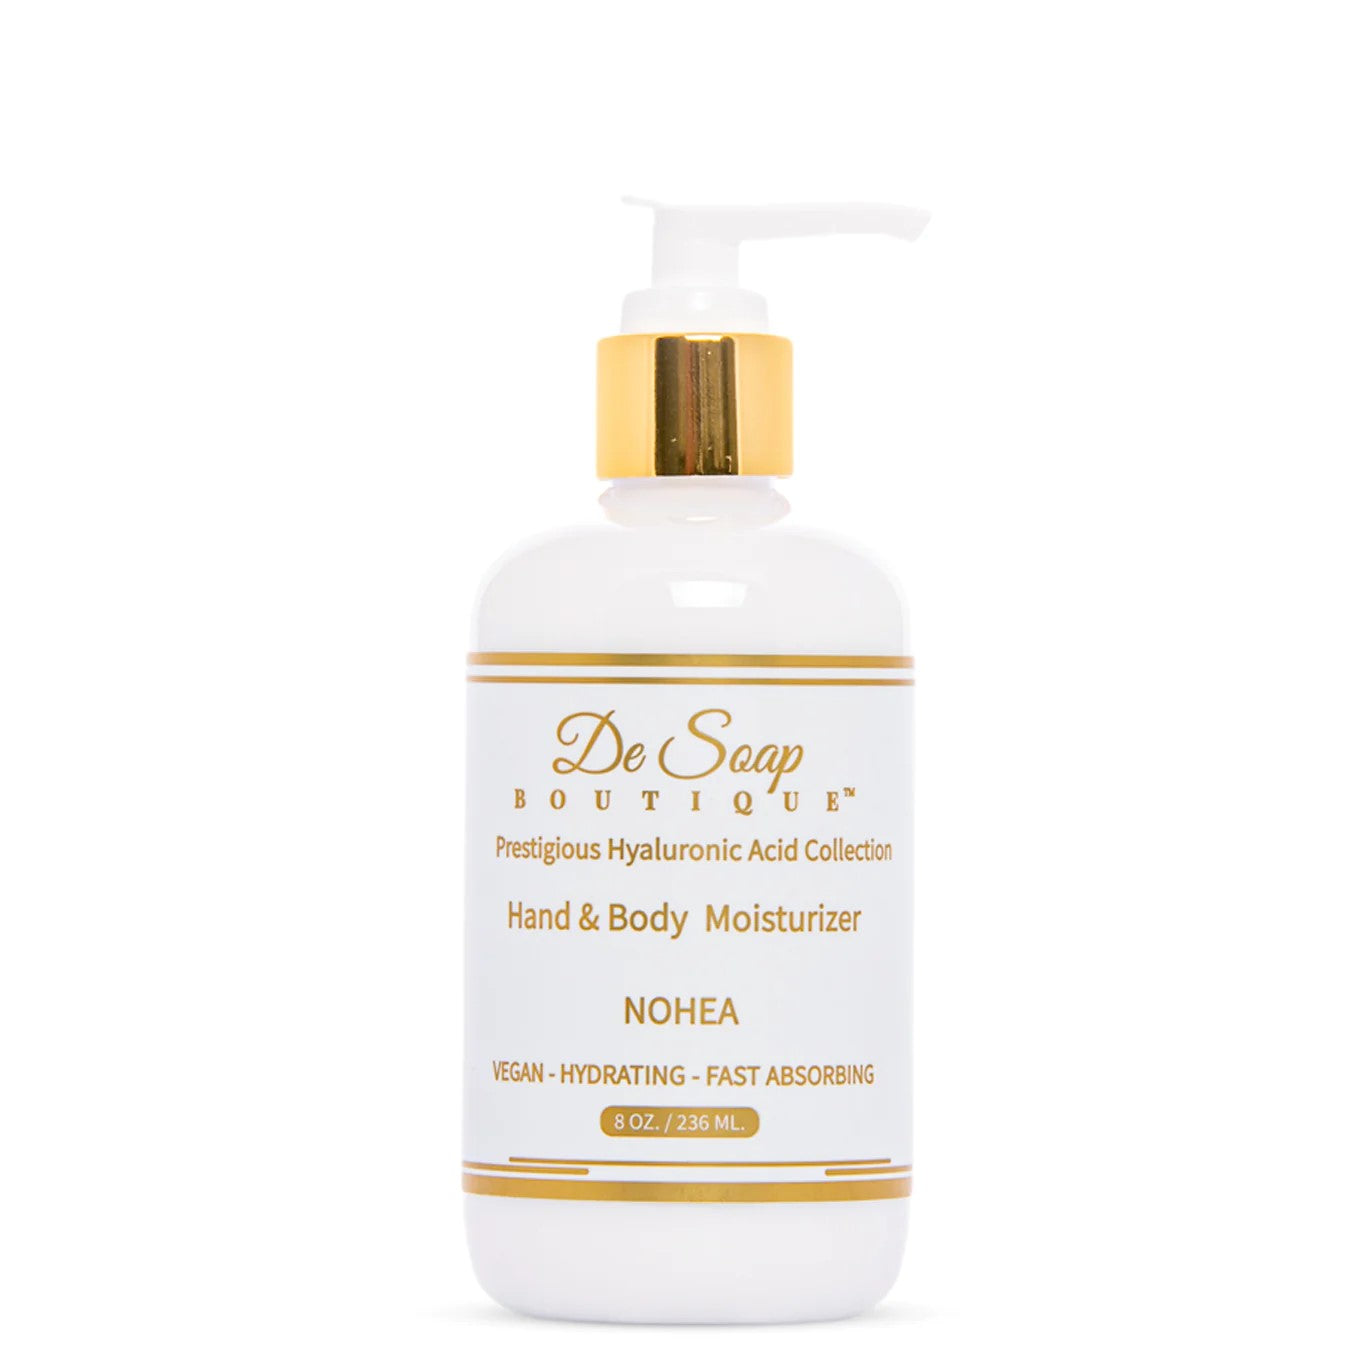 De Soap Boutique Nohea | Hand & Body Moisturizer 8 oz